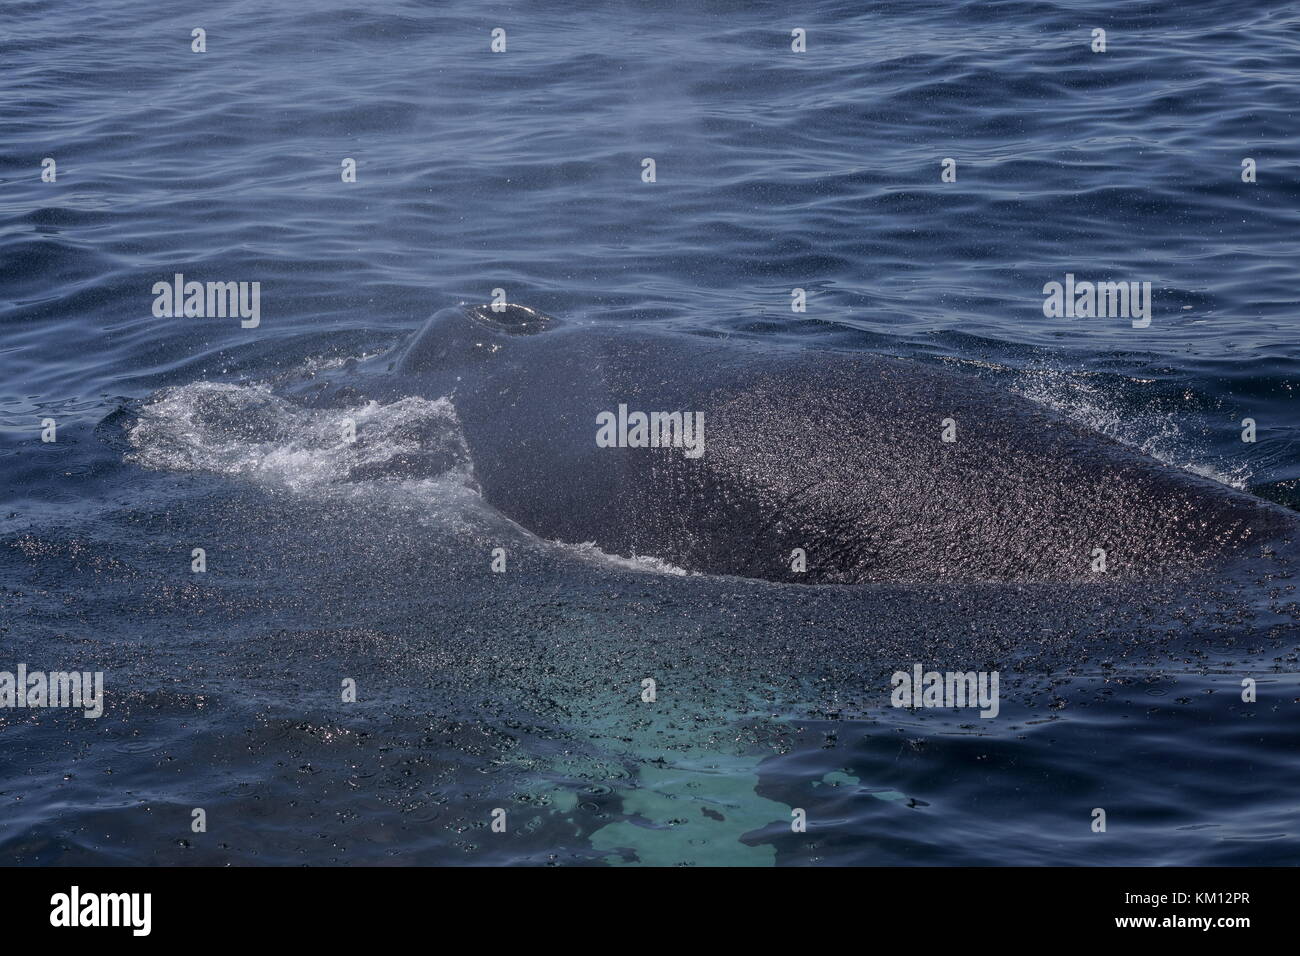 Humpback whale, Megaptera novaeangliae, surfacing to breathe. Stock Photo